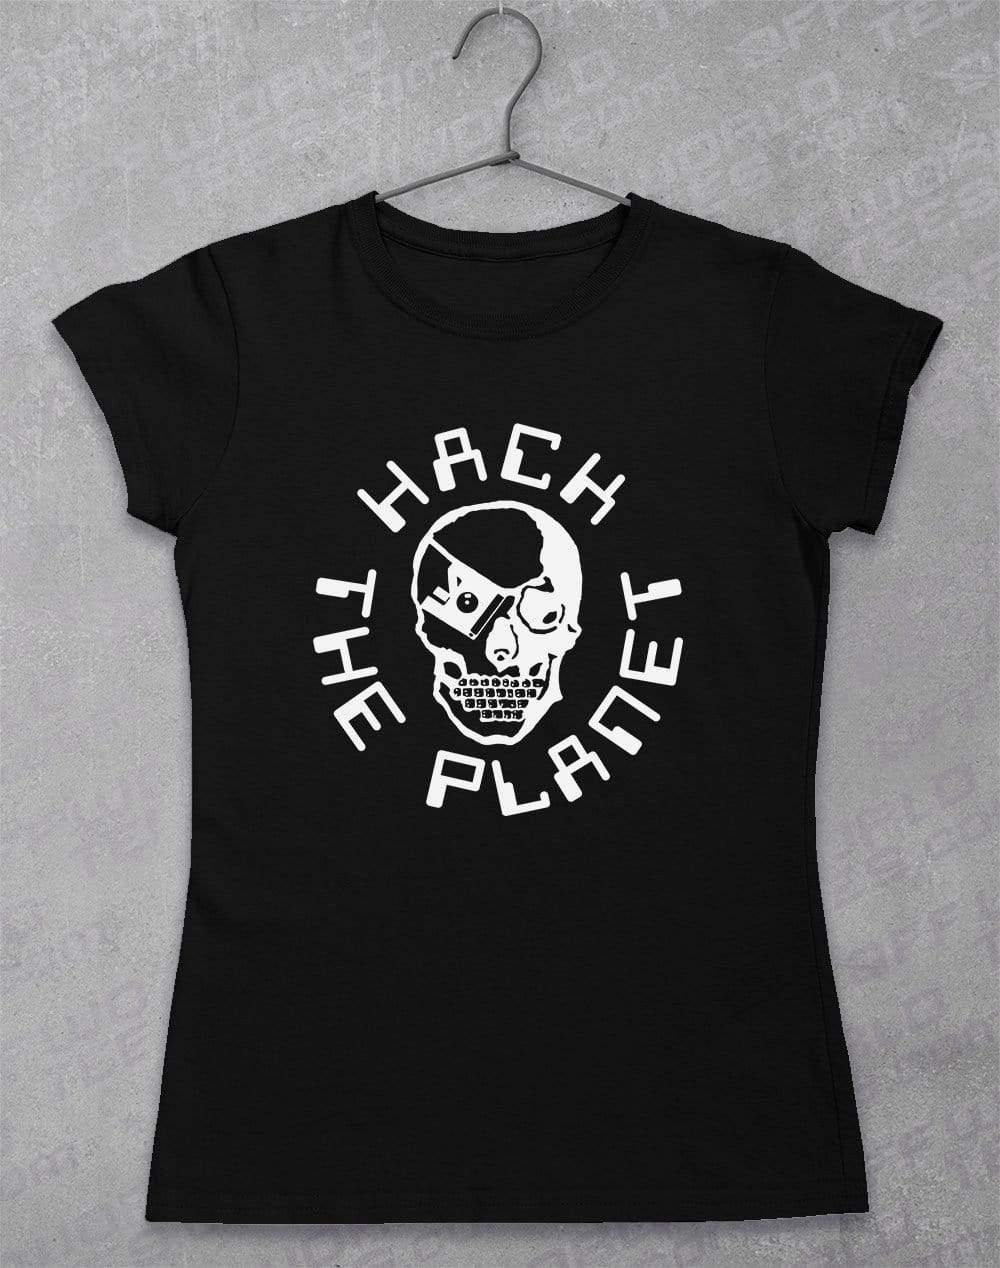 Hack the Planet - Women's T-Shirt 8-10 / Black  - Off World Tees